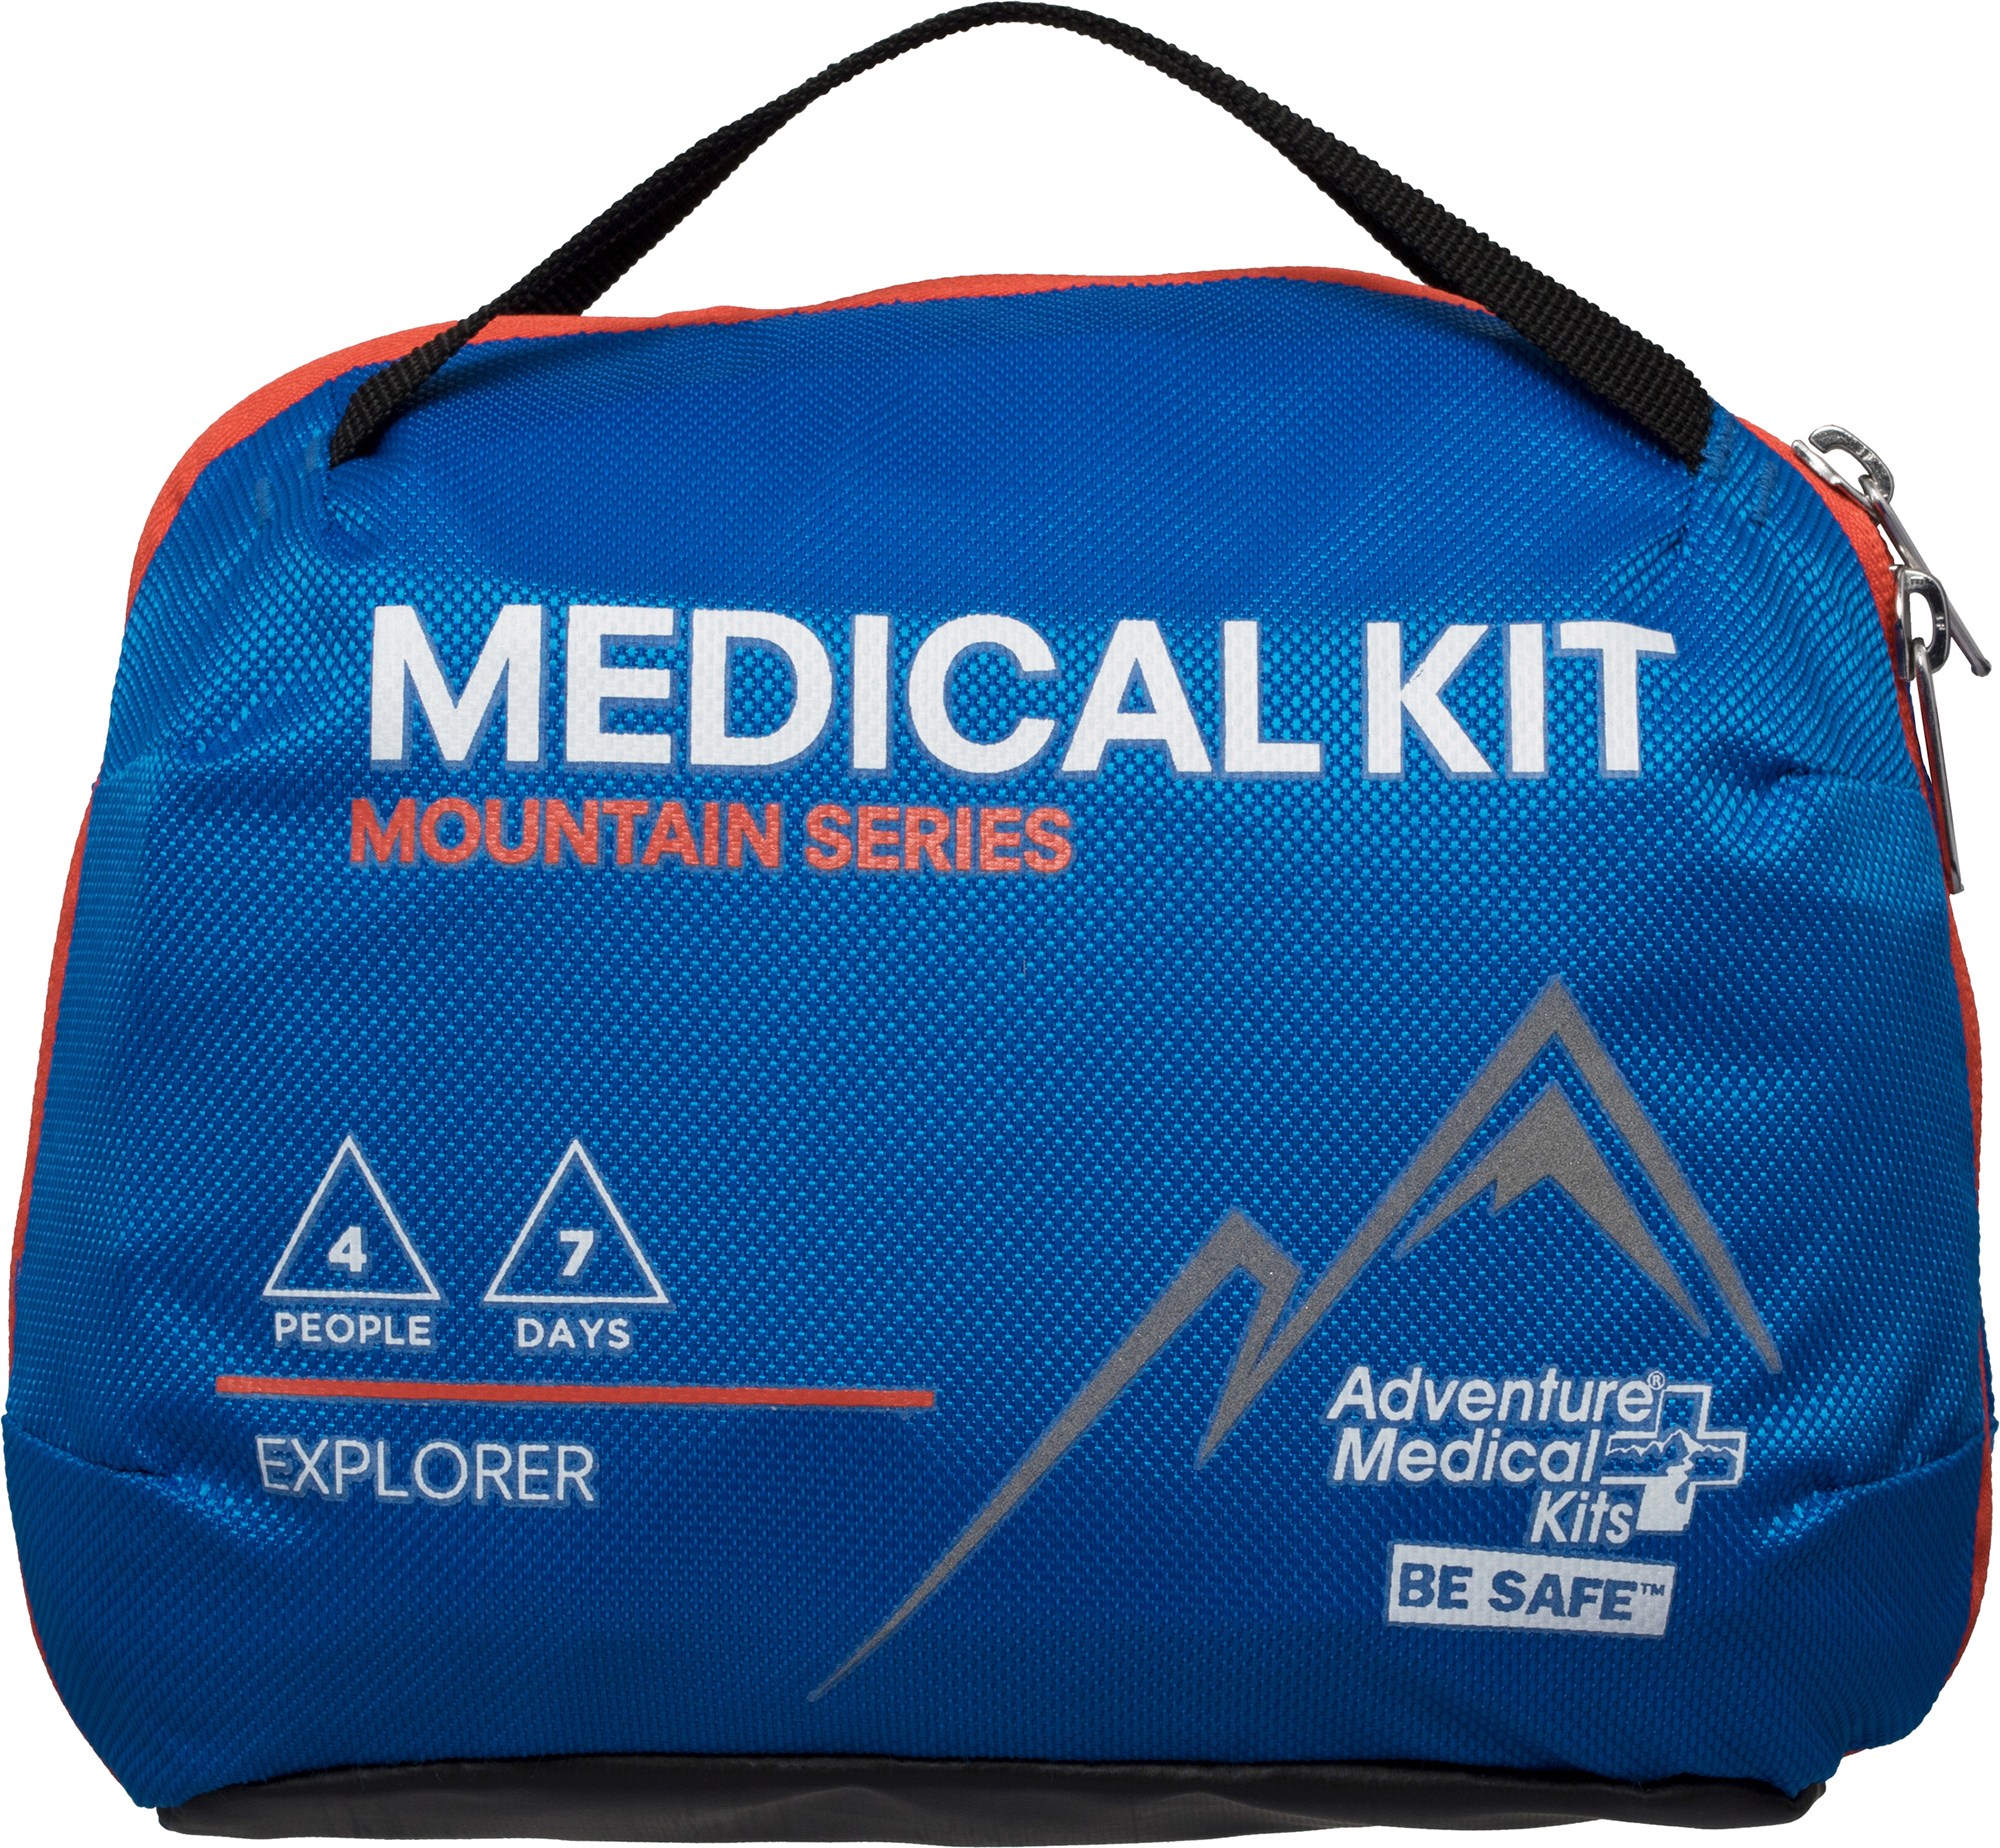 Медицинский набор Mountain Series Explorer Adventure Medical Kits, синий медицинский набор для альпинистов серии mountain adventure medical kits синий